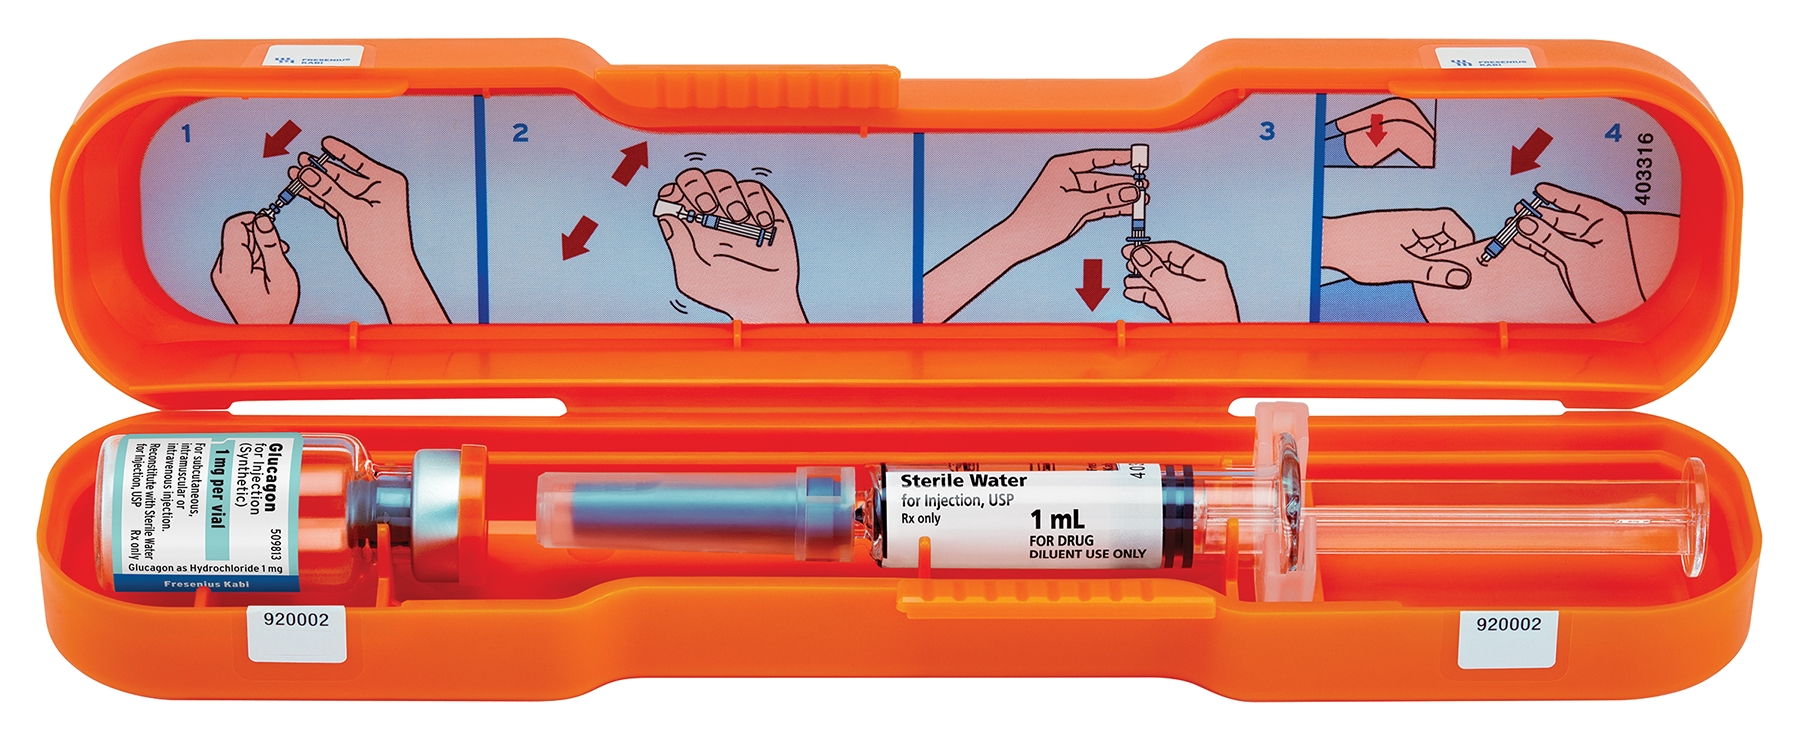 medicine for emergency kit